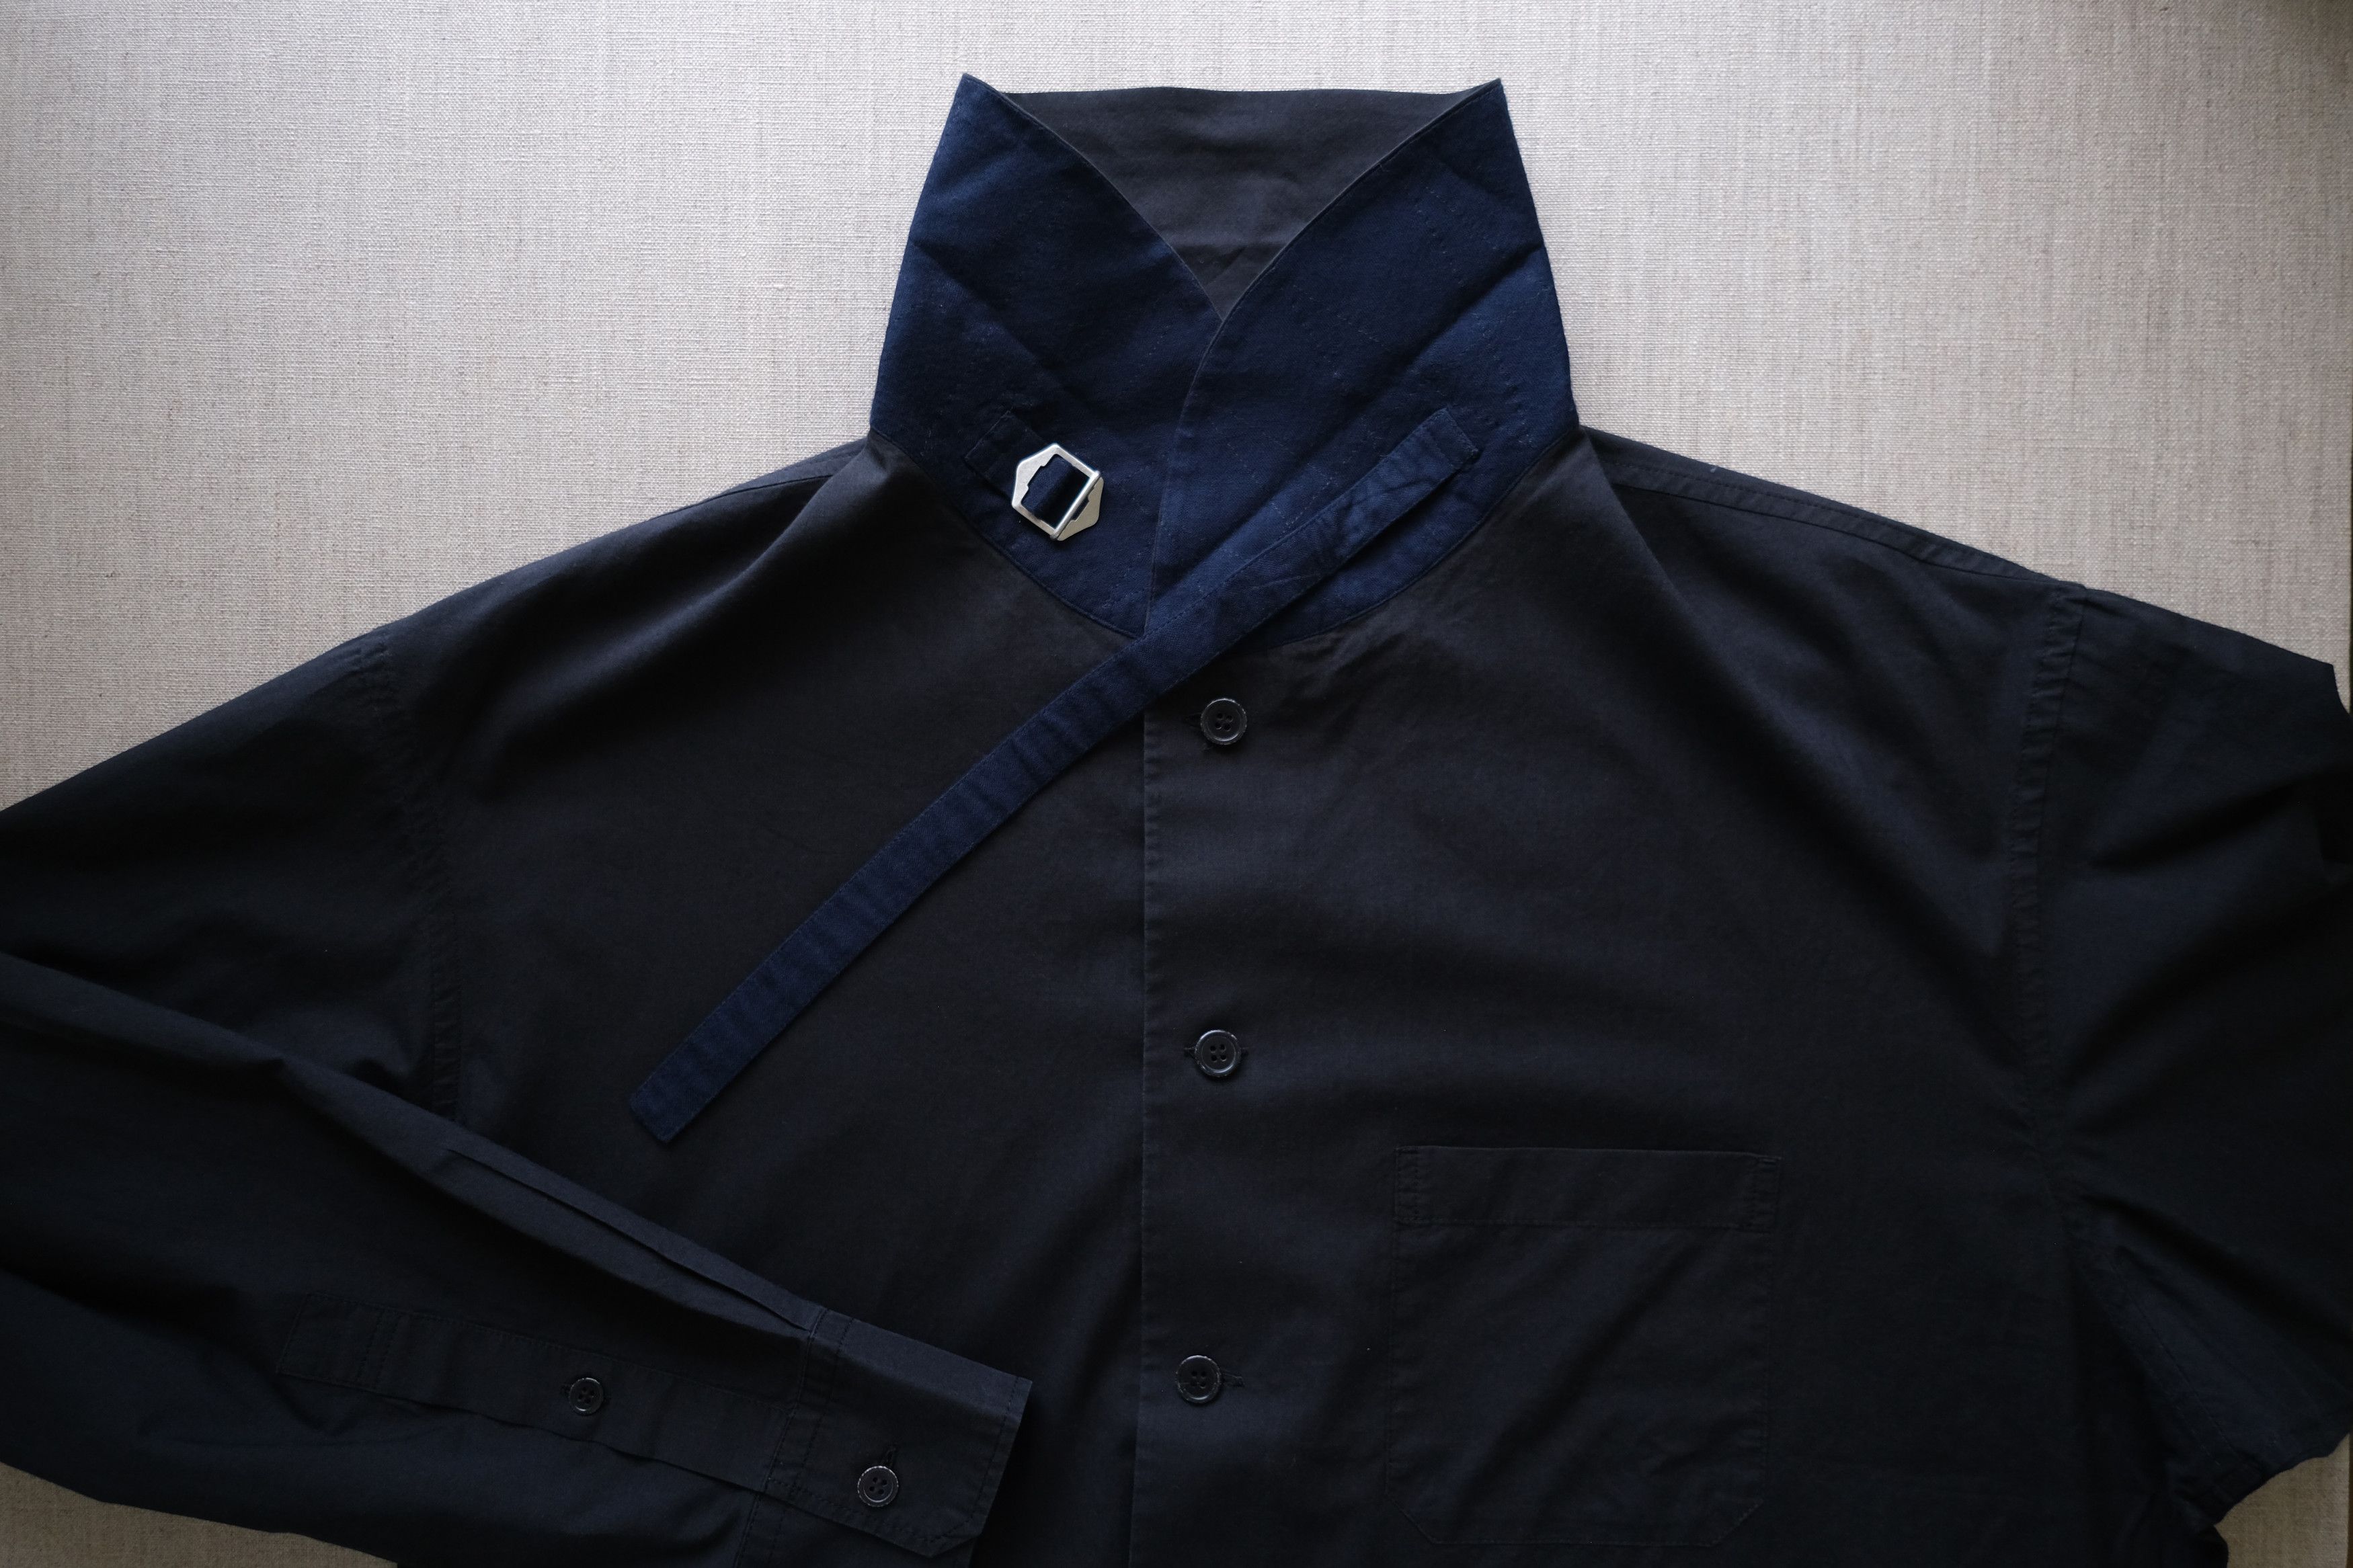 🎐 YYPH SS18-Runway Buckle-Collar Shirt - 3